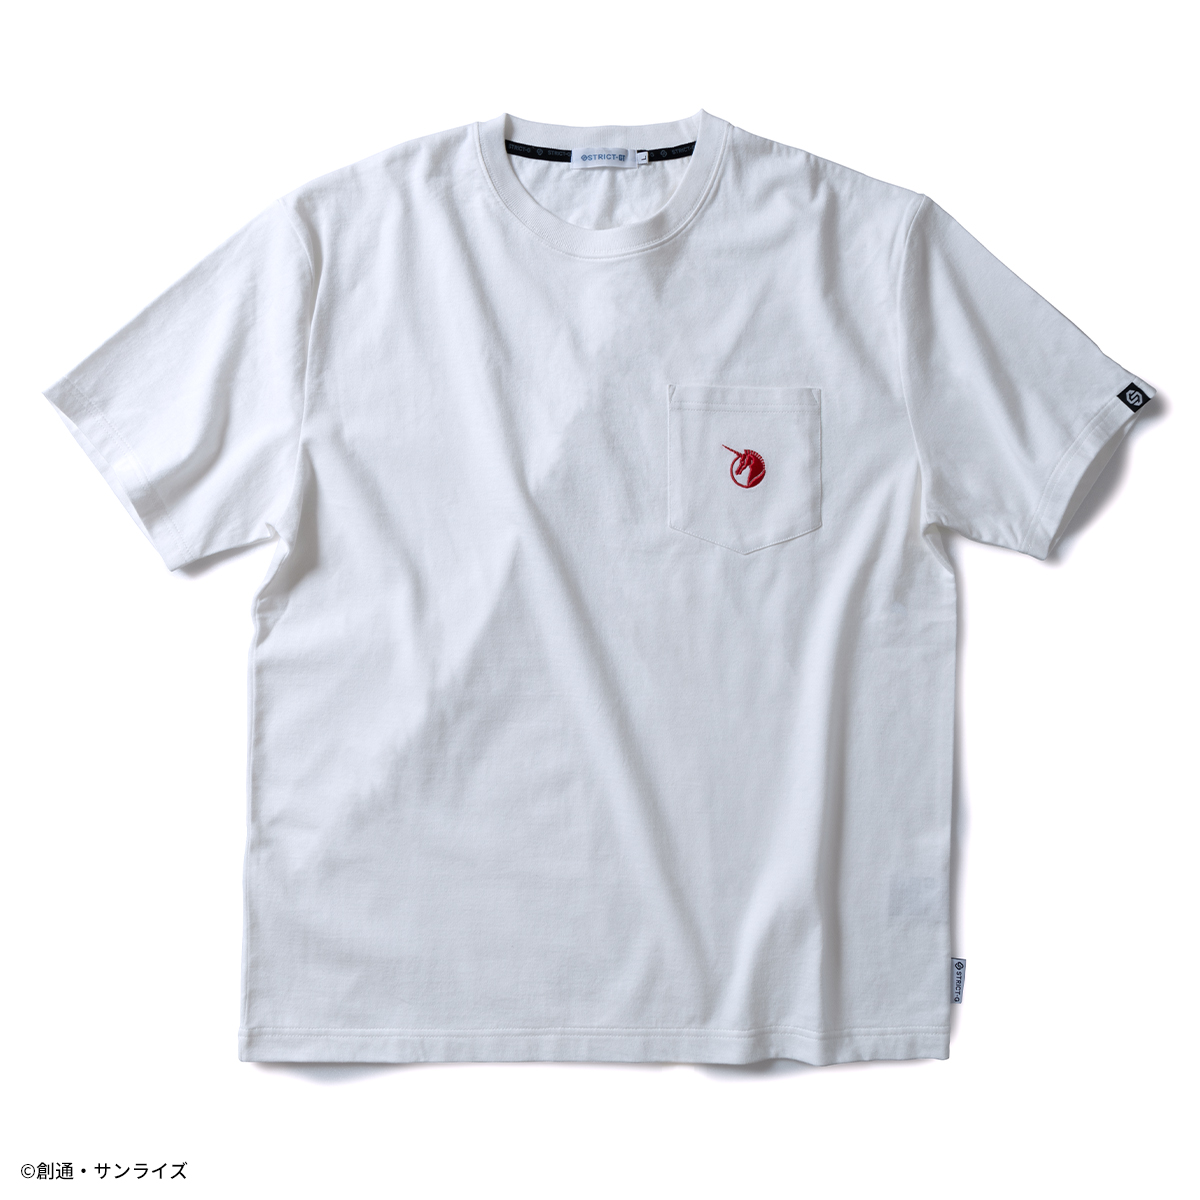 STRICT-G『機動戦士ガンダムUC』ポケット付き半袖Tシャツ ビスト財団